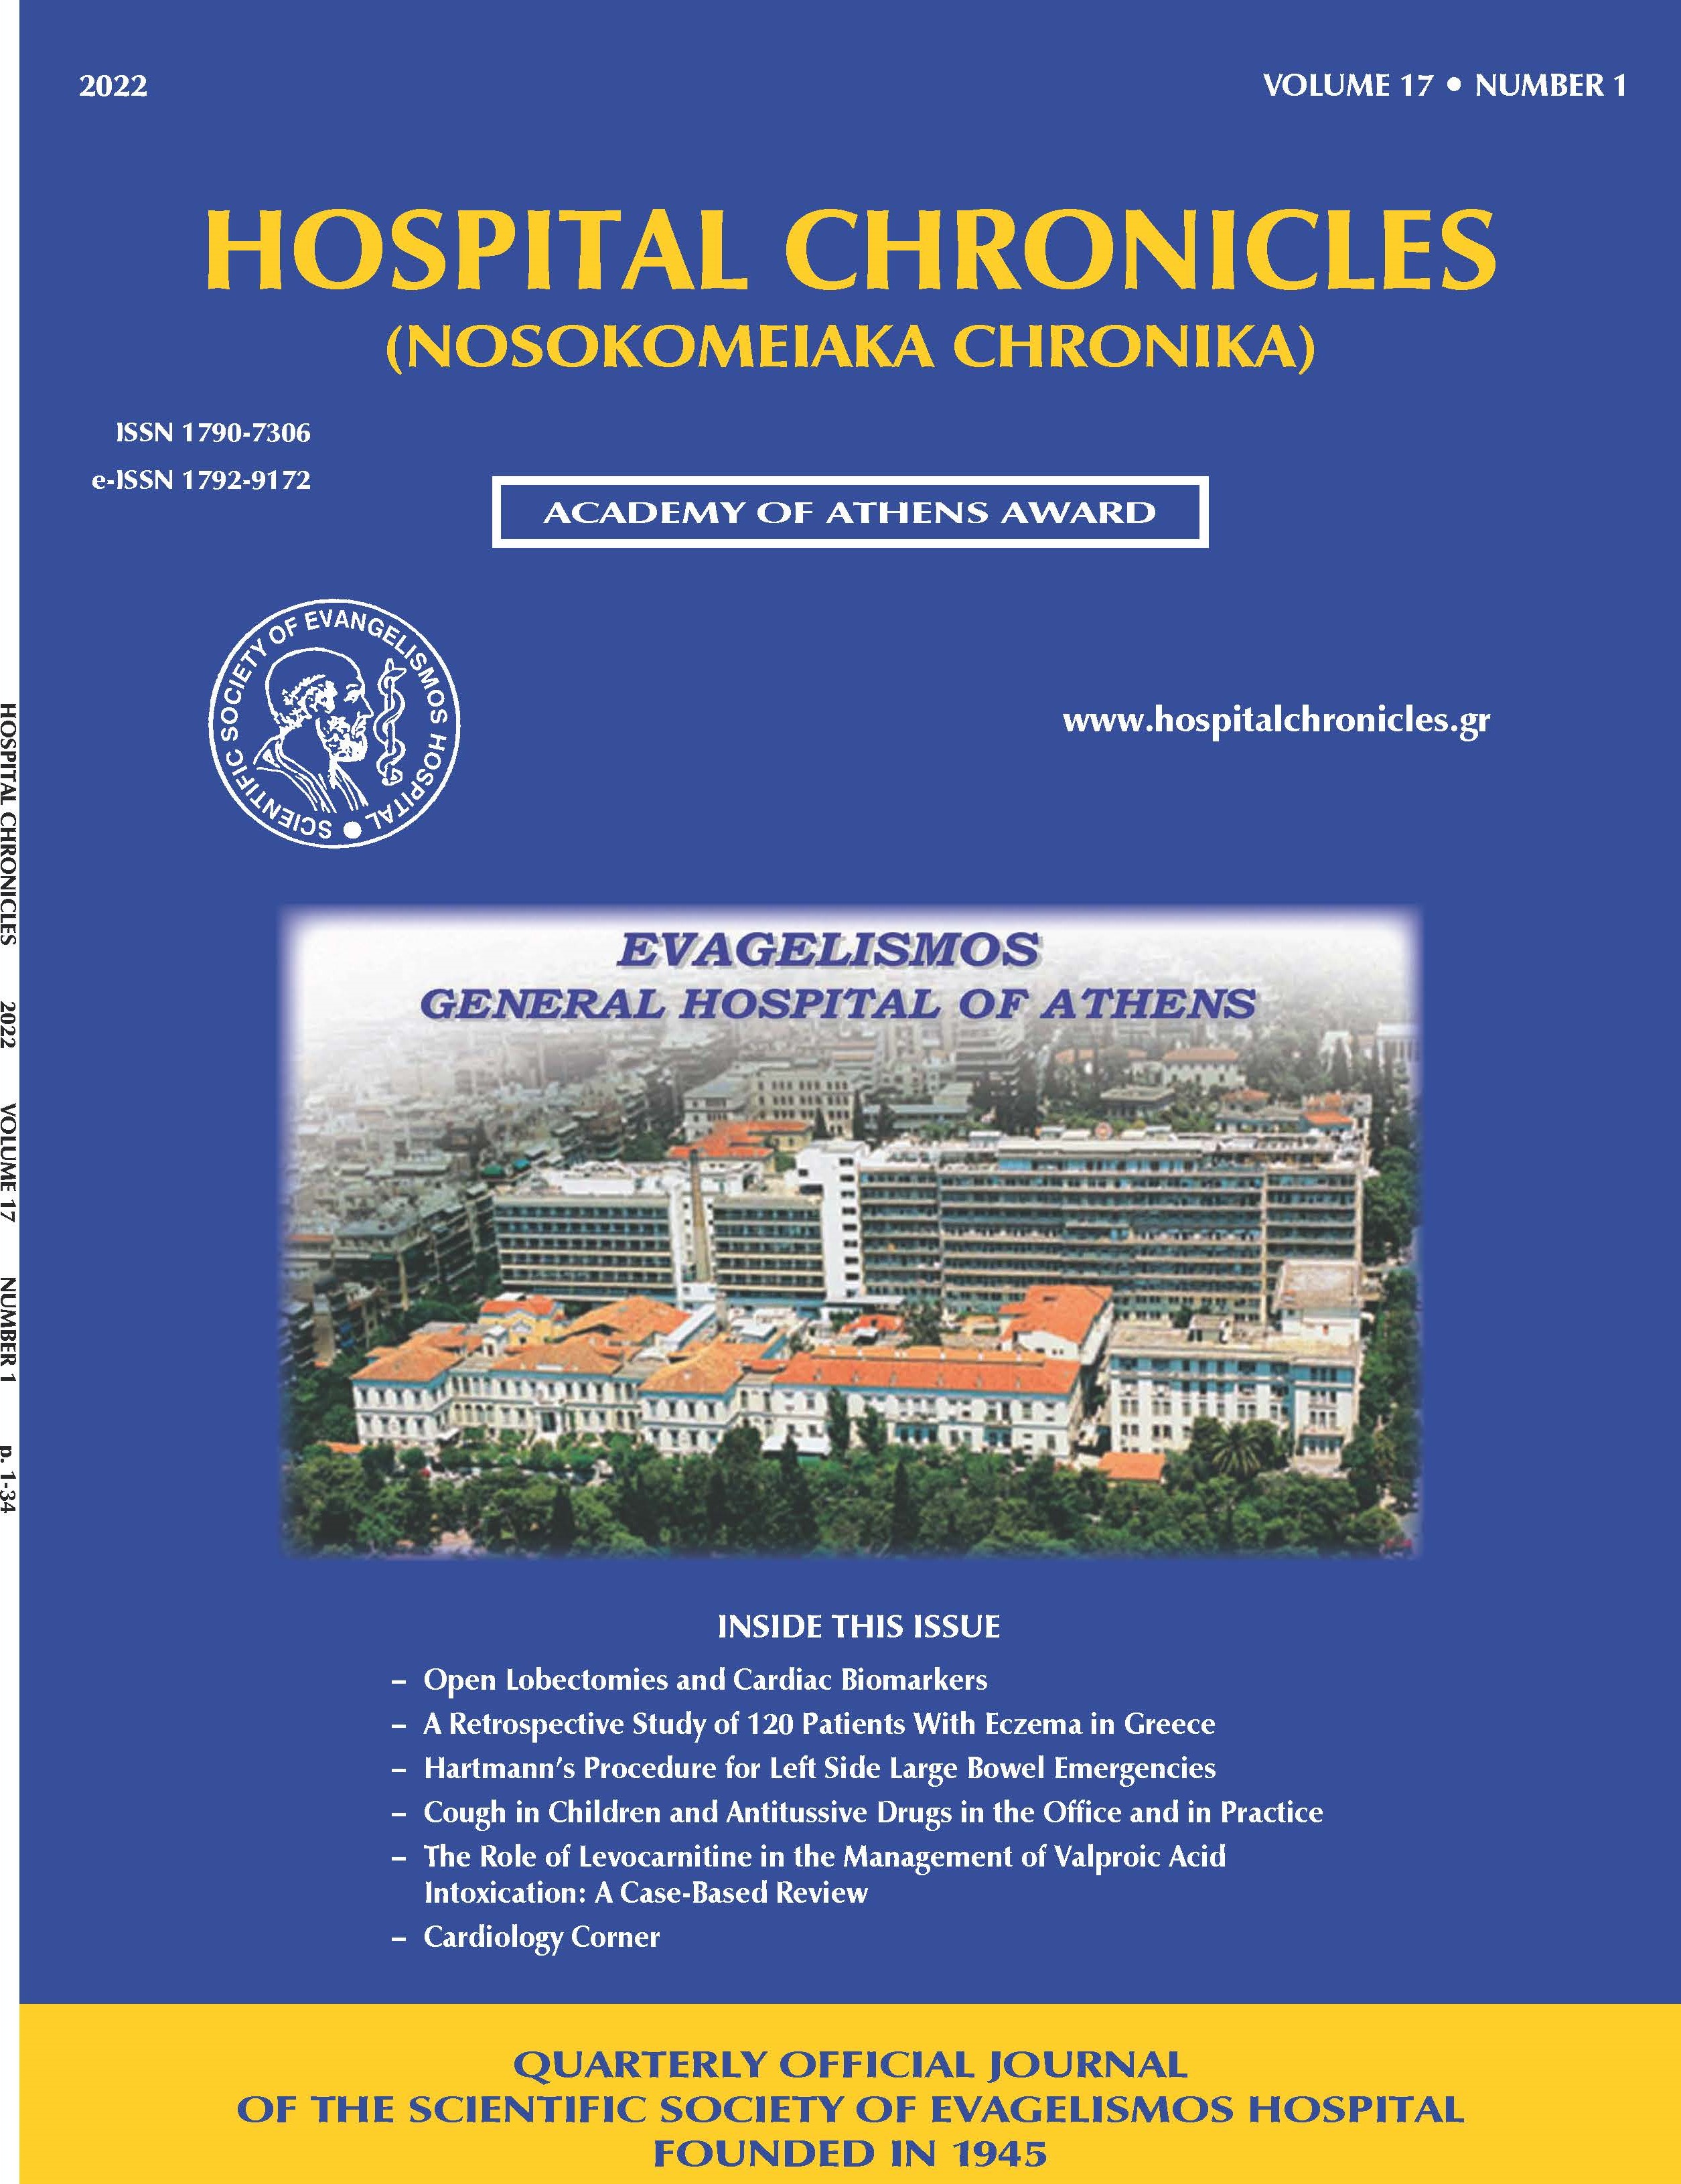 					View Vol. 17 No. 1 (2022): HOSPITAL CHRONICLES (NOSOKOMEIAKA CHRONIKA)
				